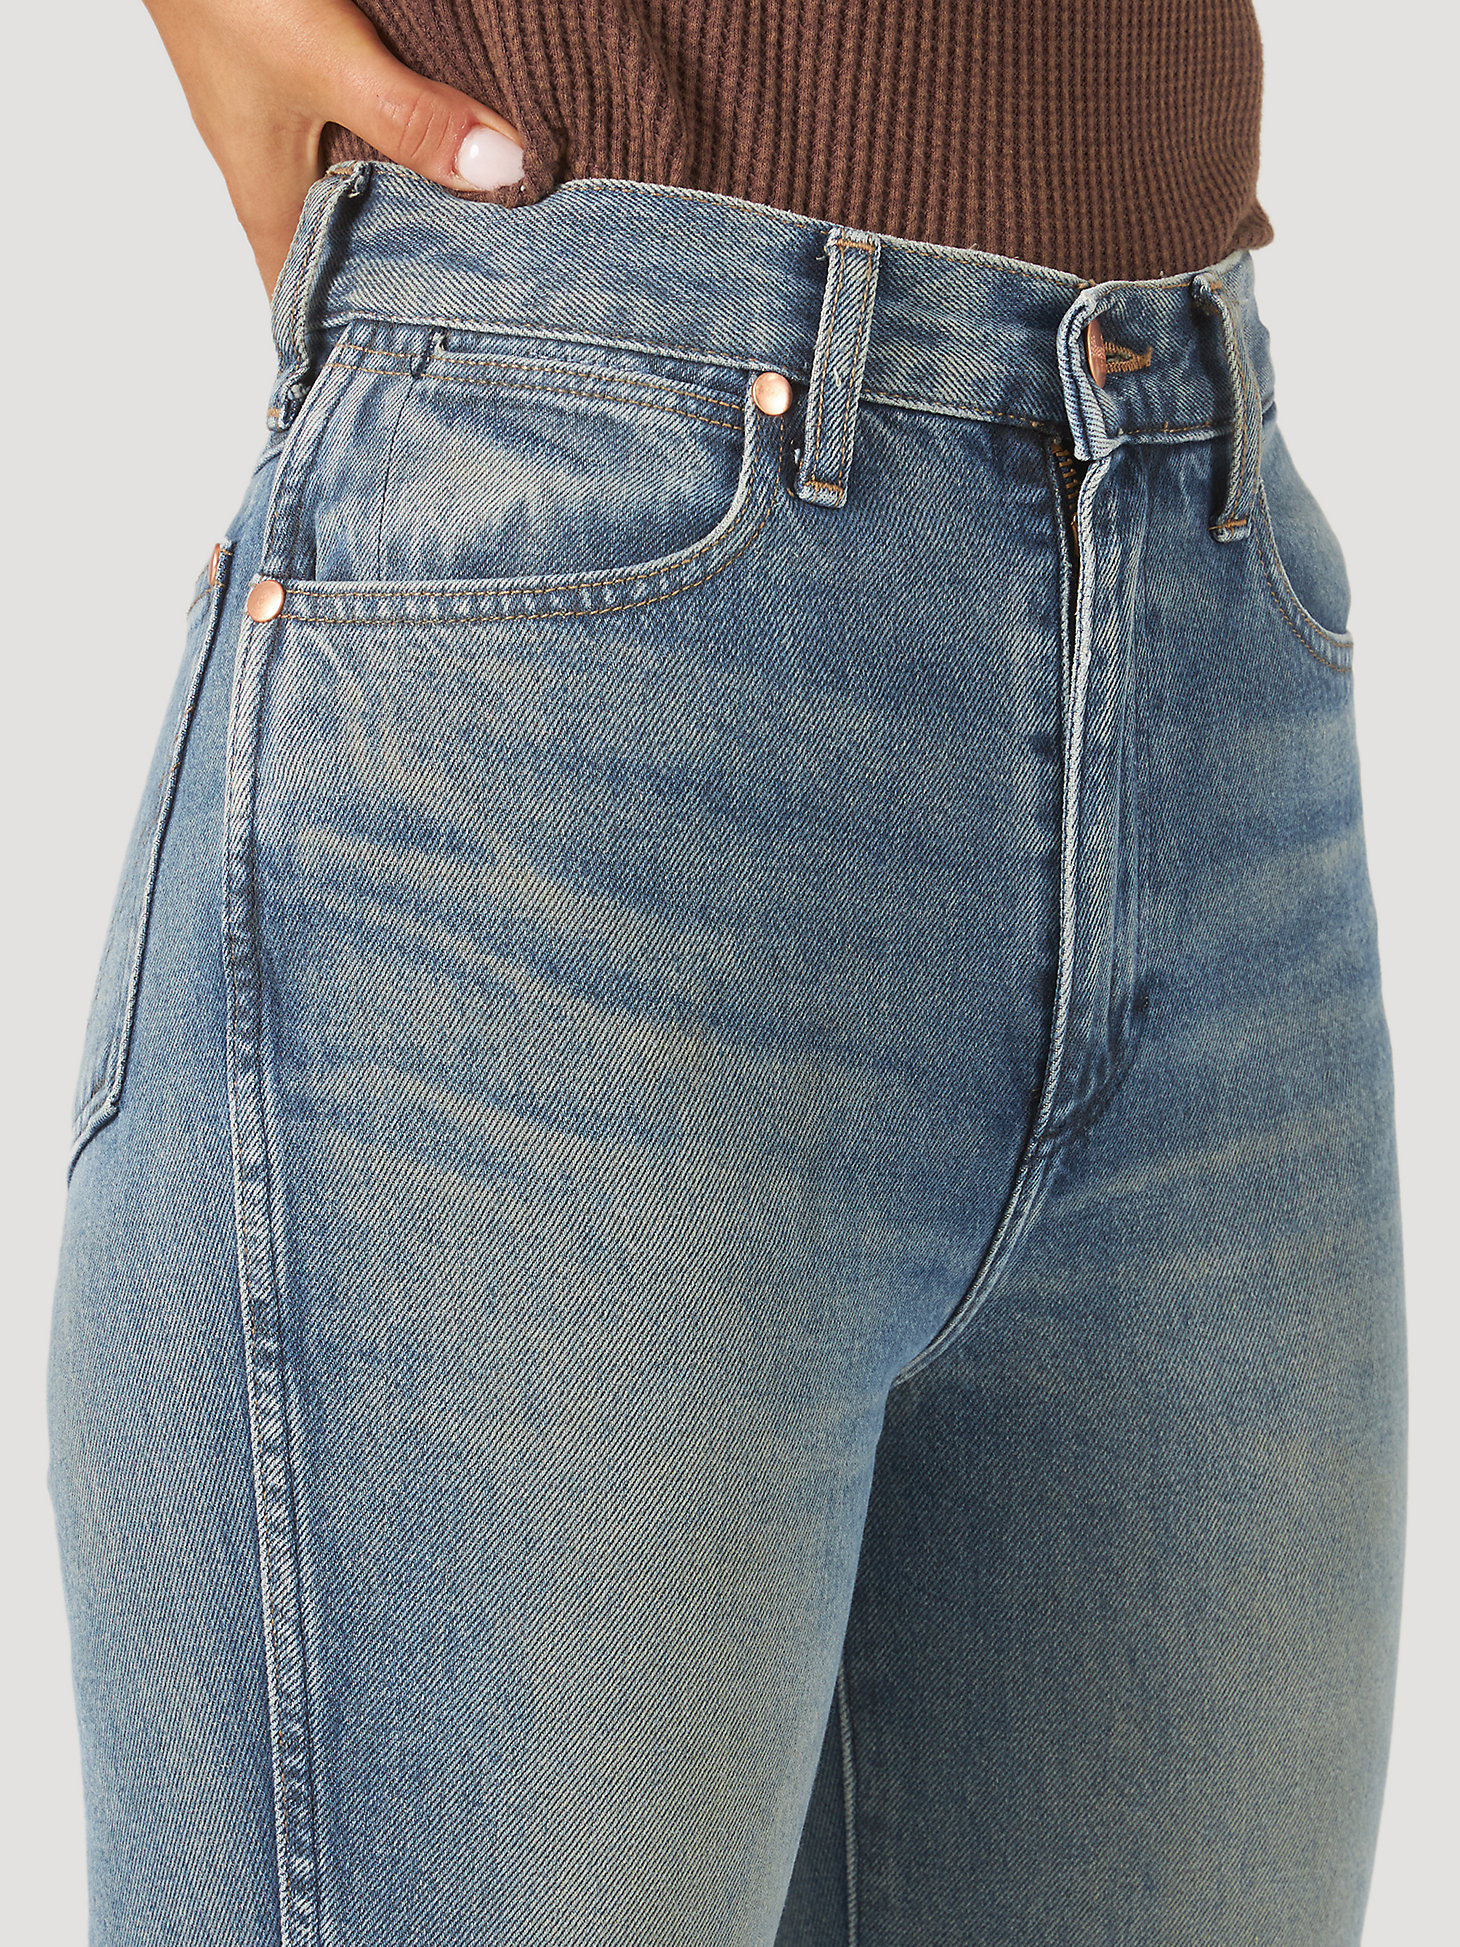 Women's Wrangler® Westward 626 High Rise Bootcut Jean in Peach Tint alternative view 3